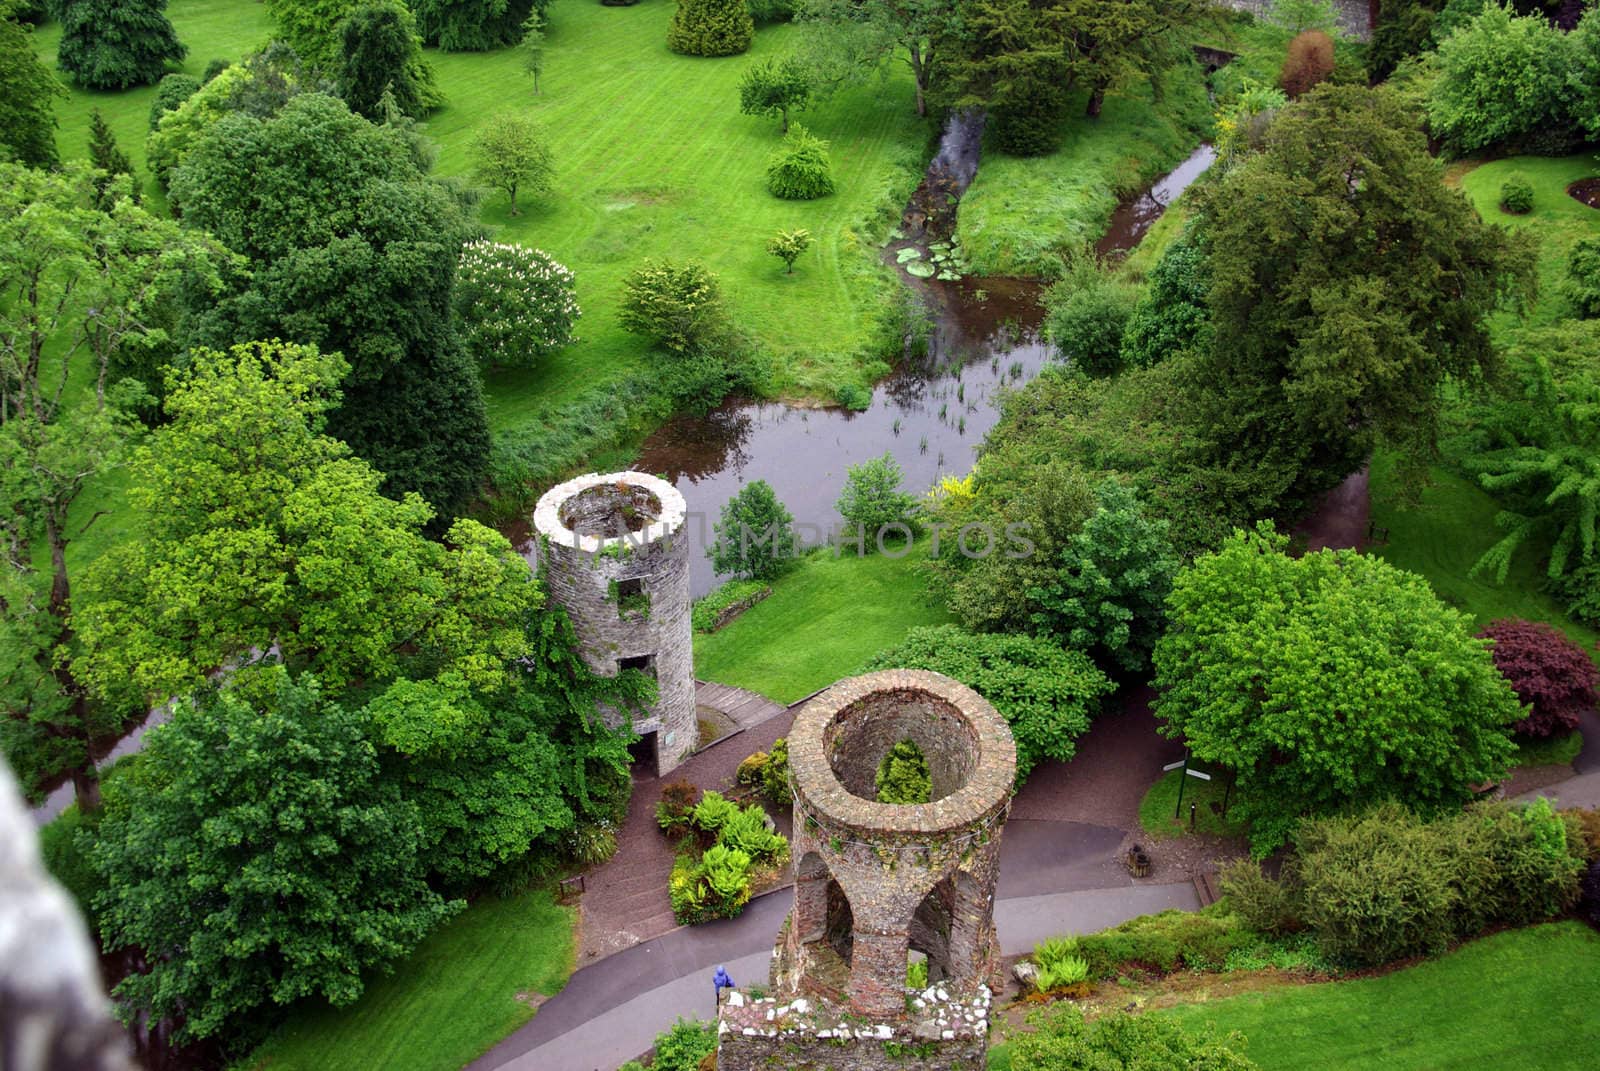 Fields around Blarney Castle in Ireland by edcorey